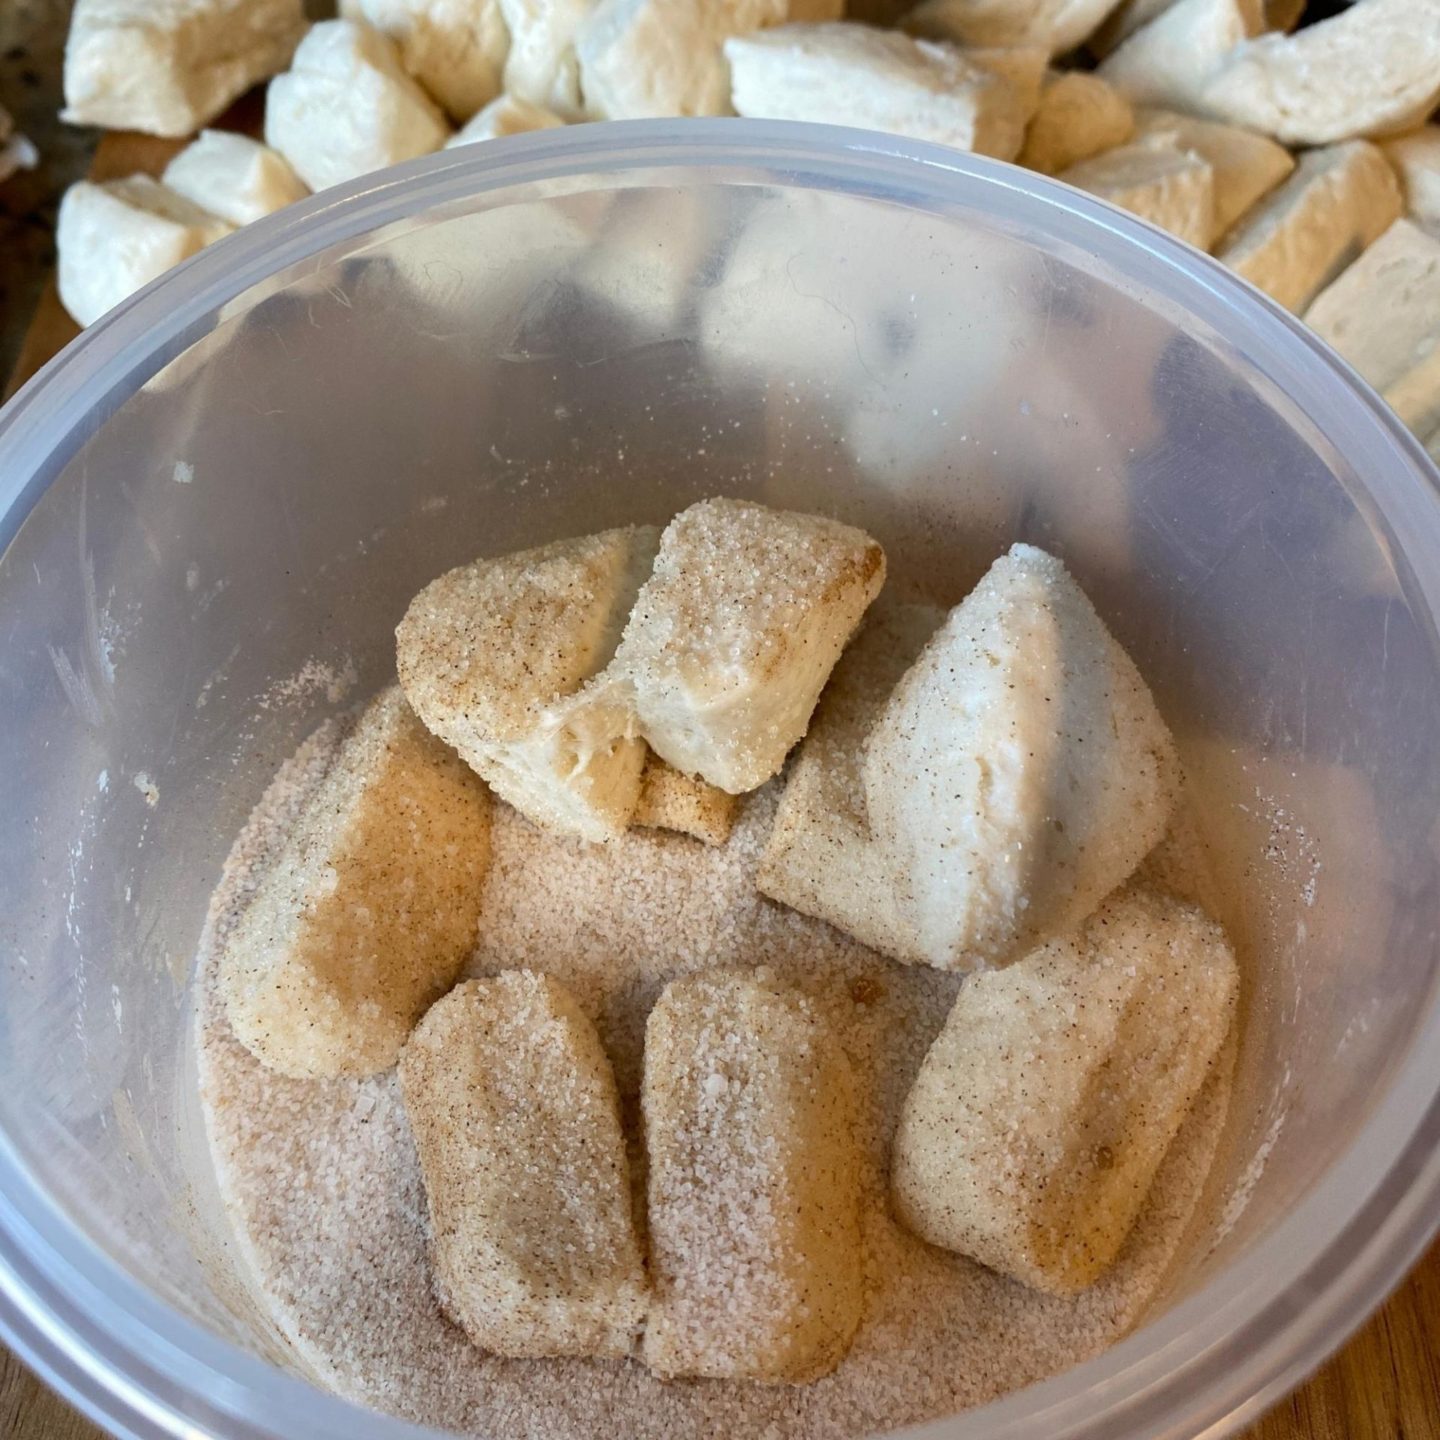 monkey bread dough balls in sugar mixture